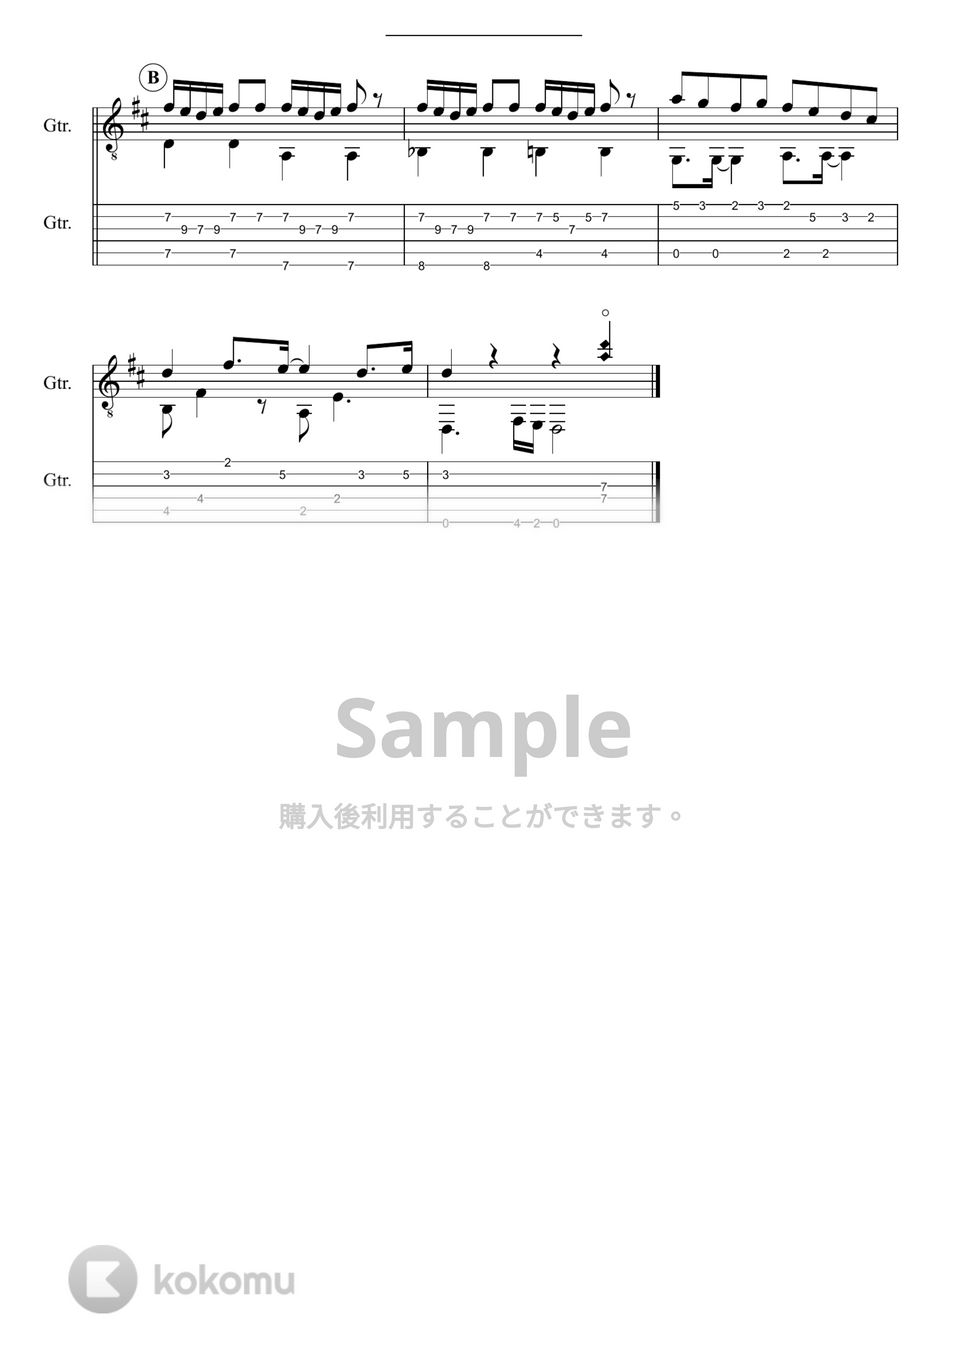 乃木坂46 - Sing Out! by 鷹城-Takajoe-